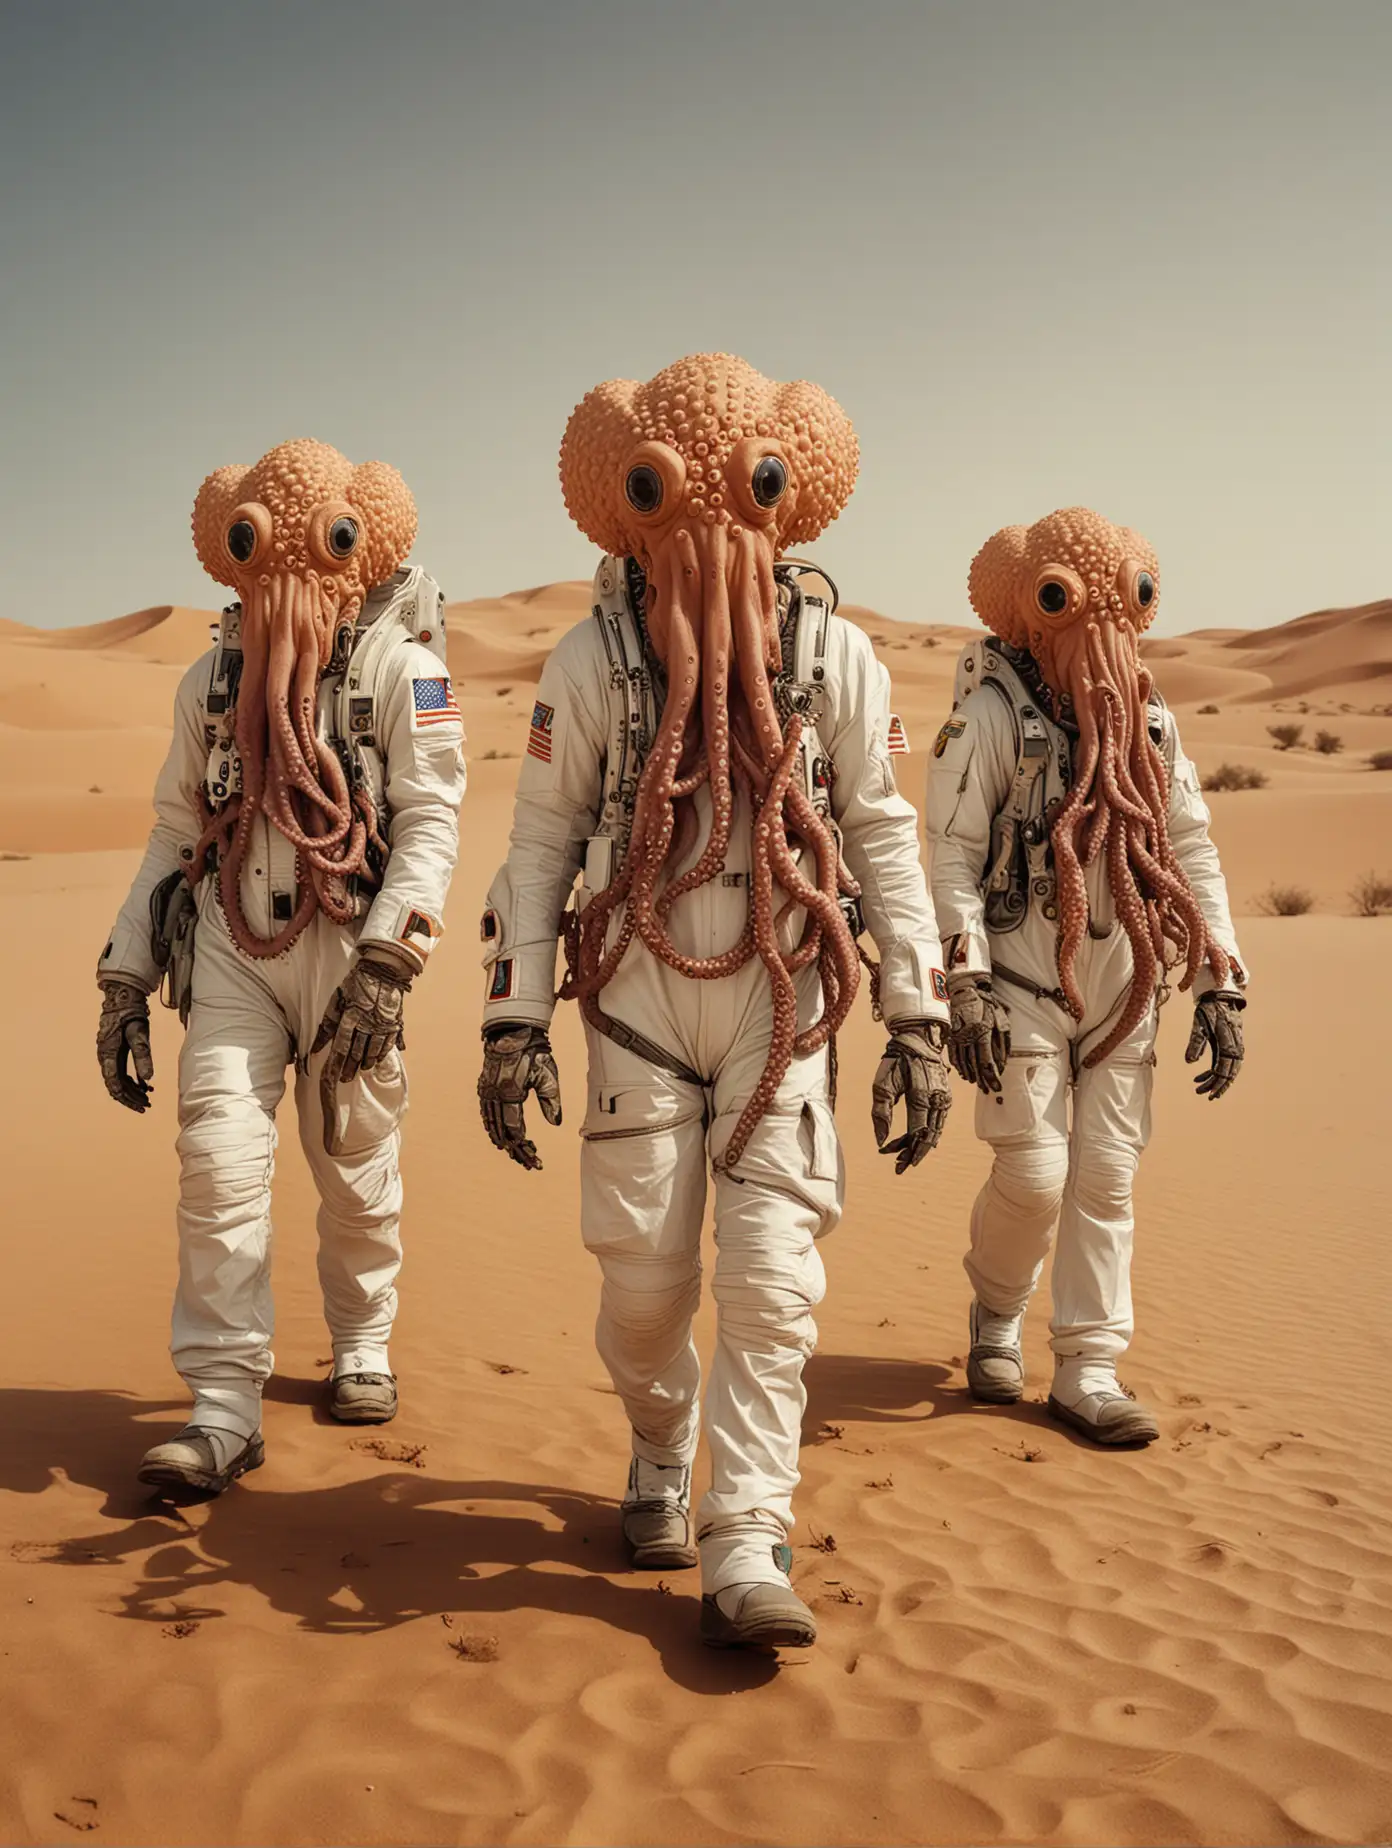 Surreal-Anthropomorphic-Octopus-Astronauts-Walking-in-Sahara-Desert